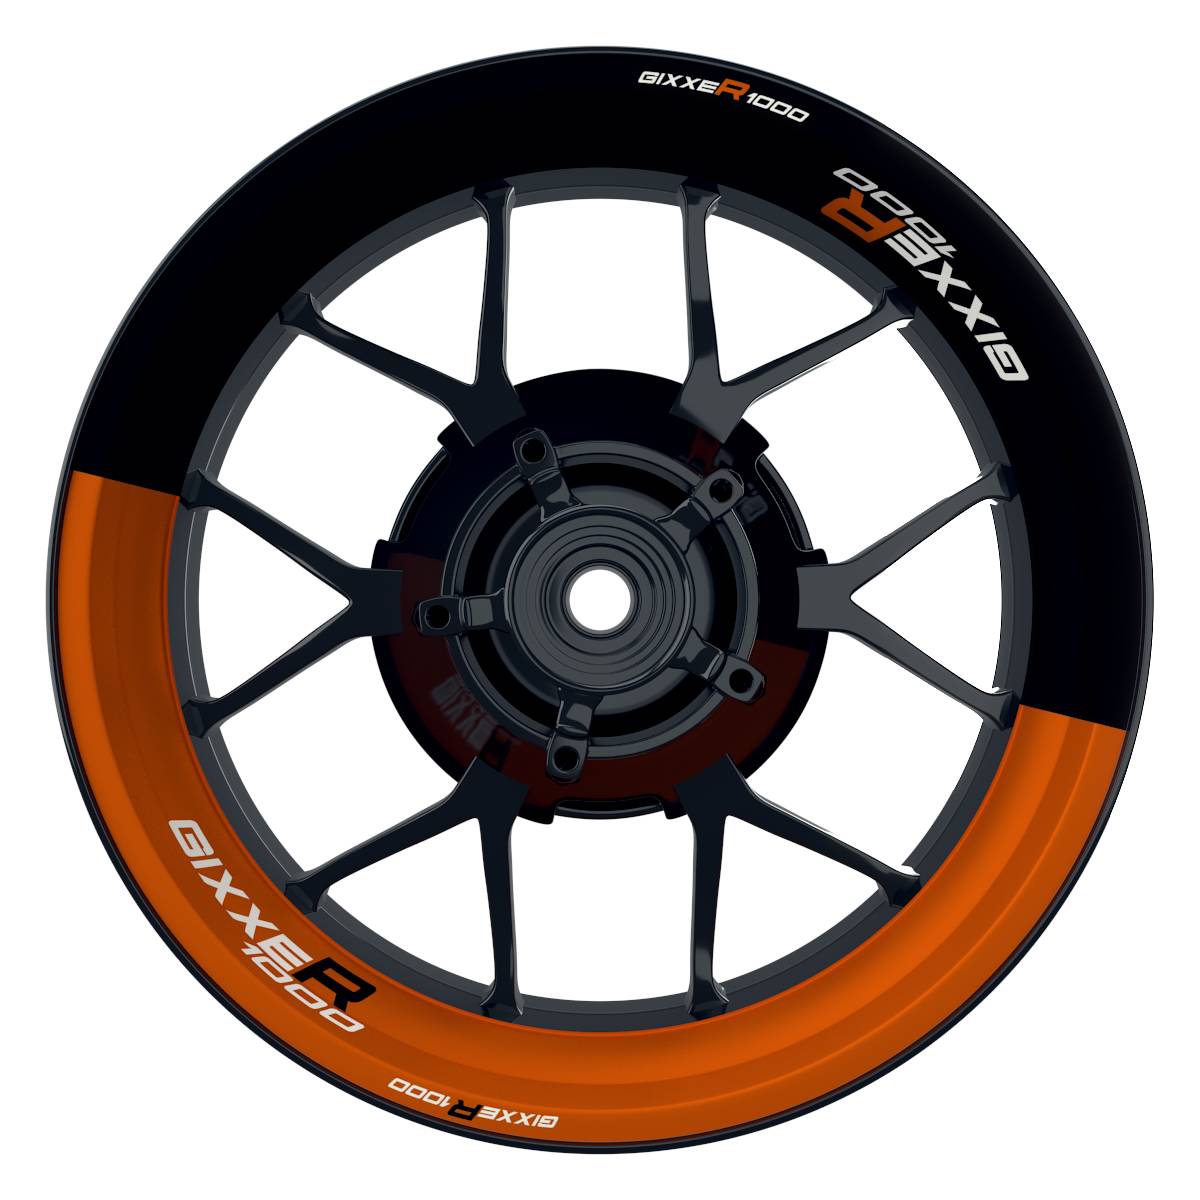 GIXXER1000 Halb halb schwarz orange Wheelsticker Felgenaufkleber